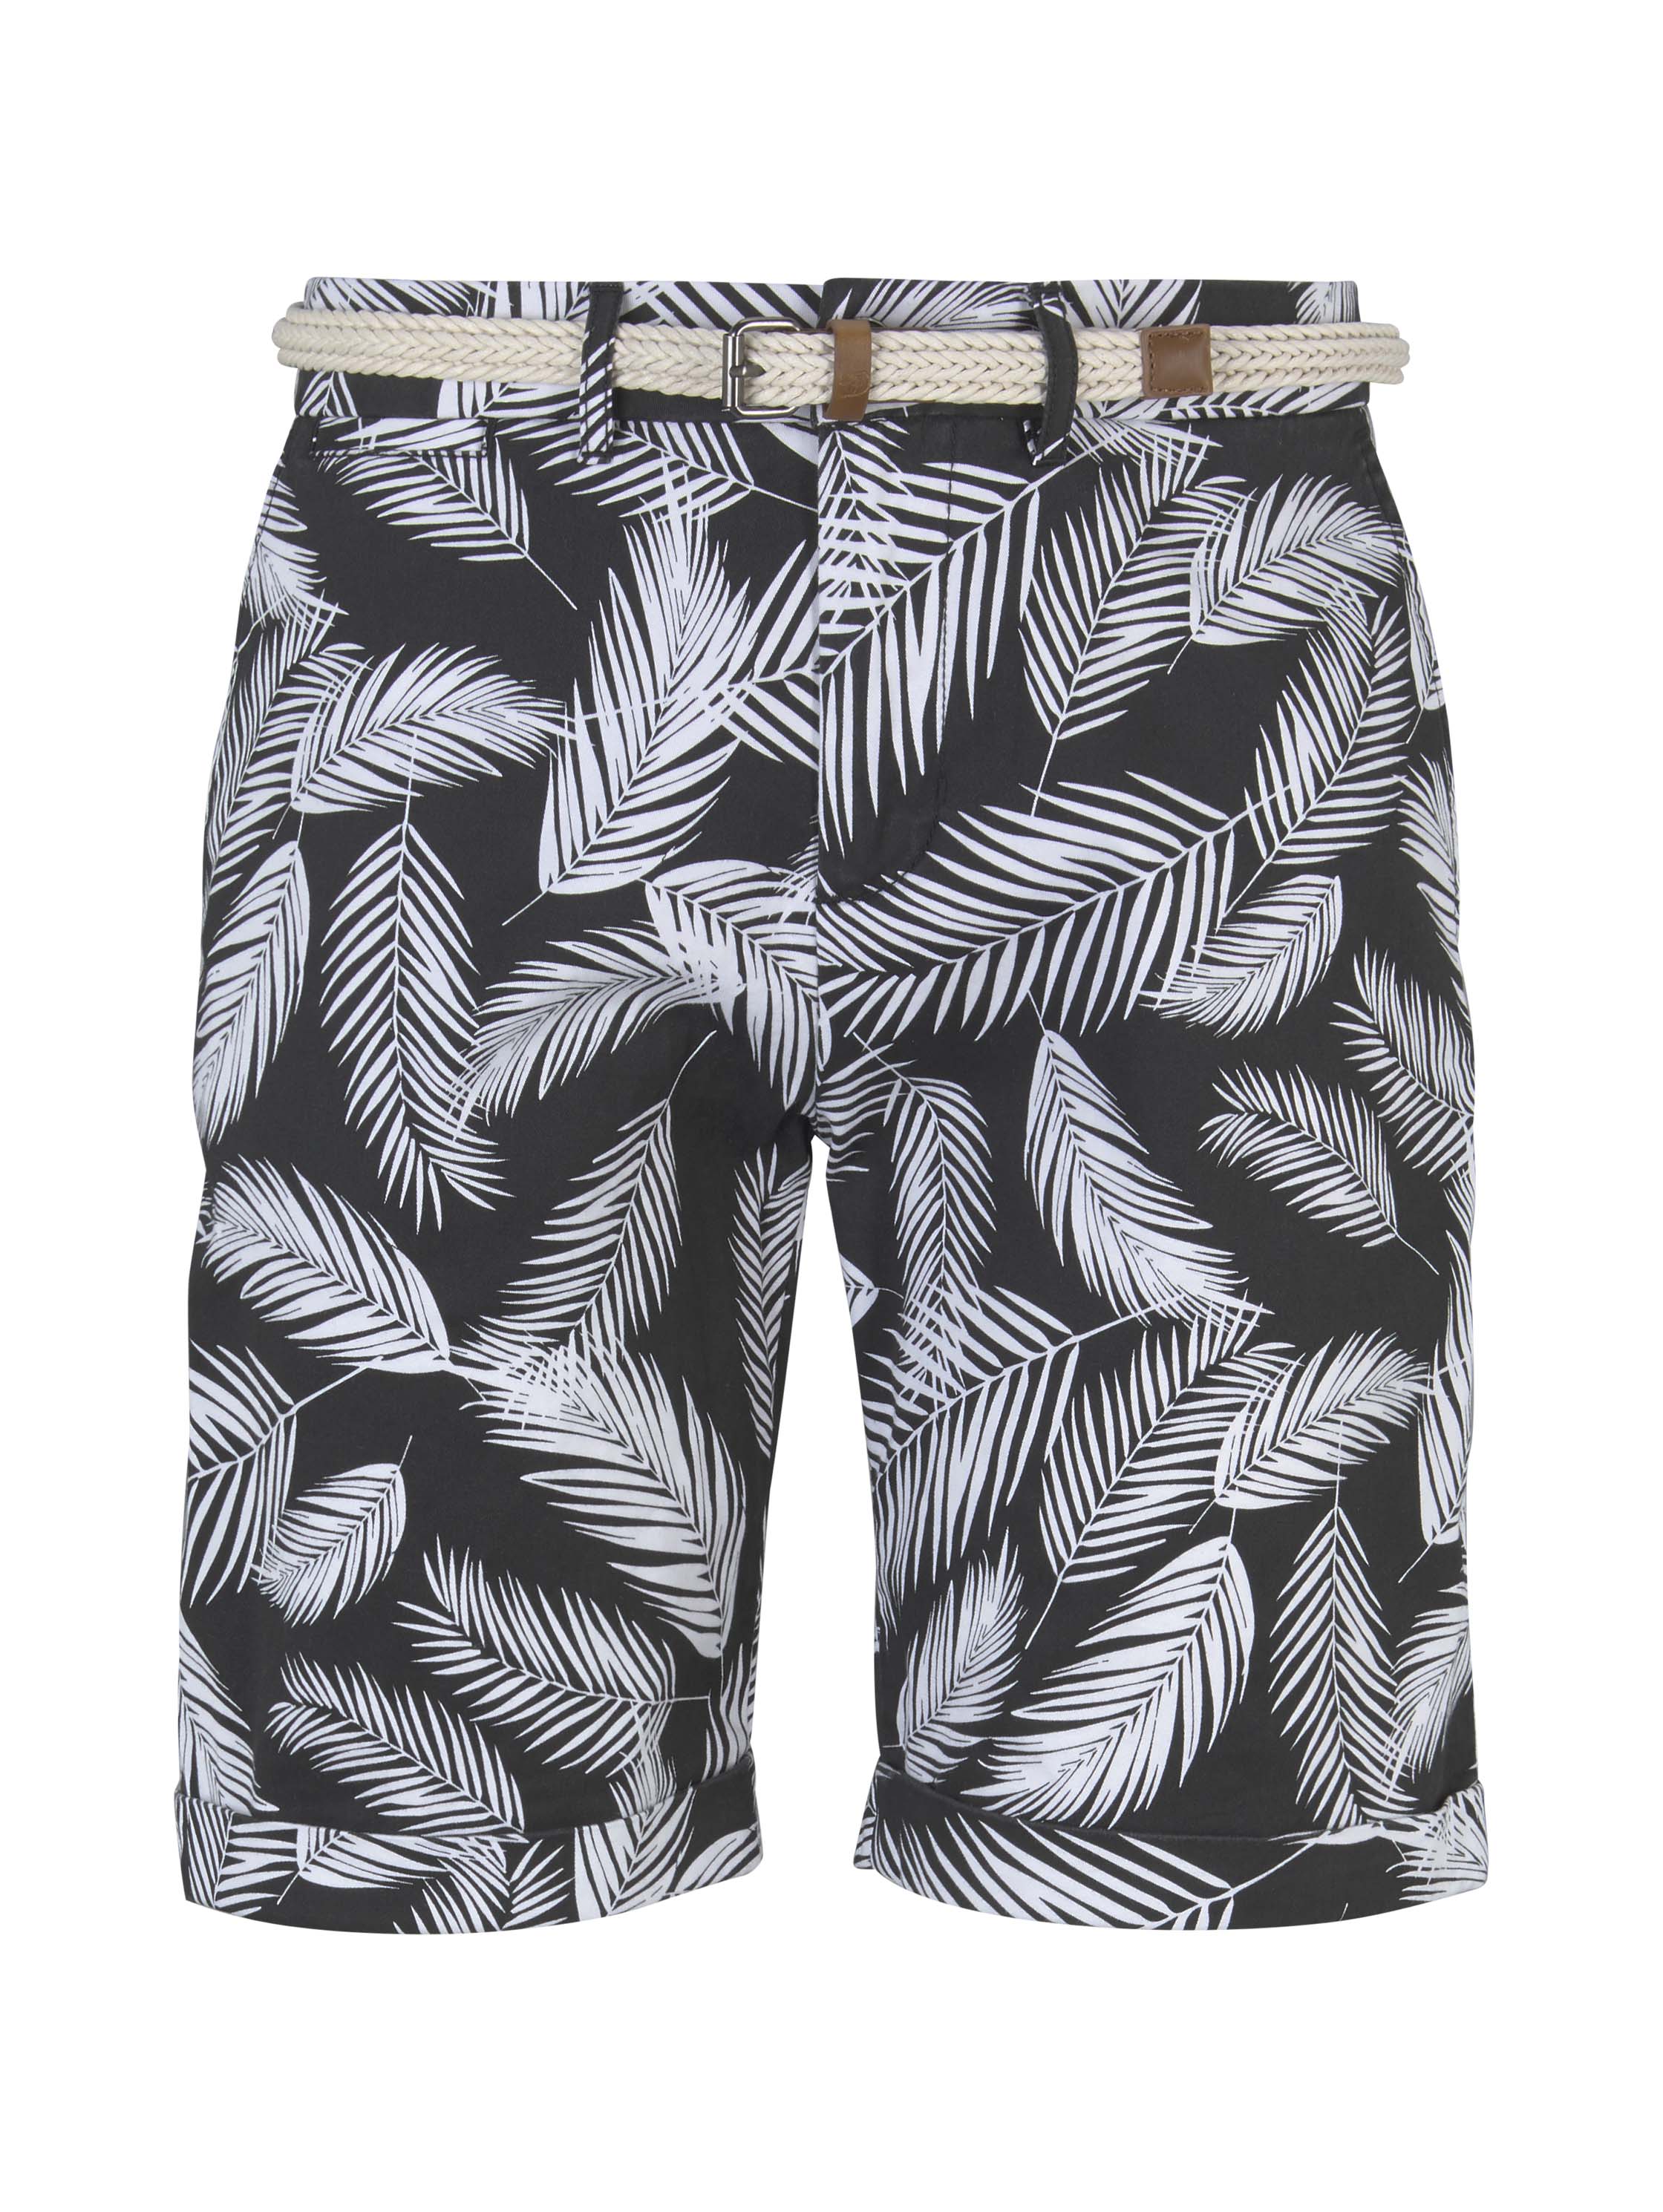 aop chino shorts, black white palm leaves print